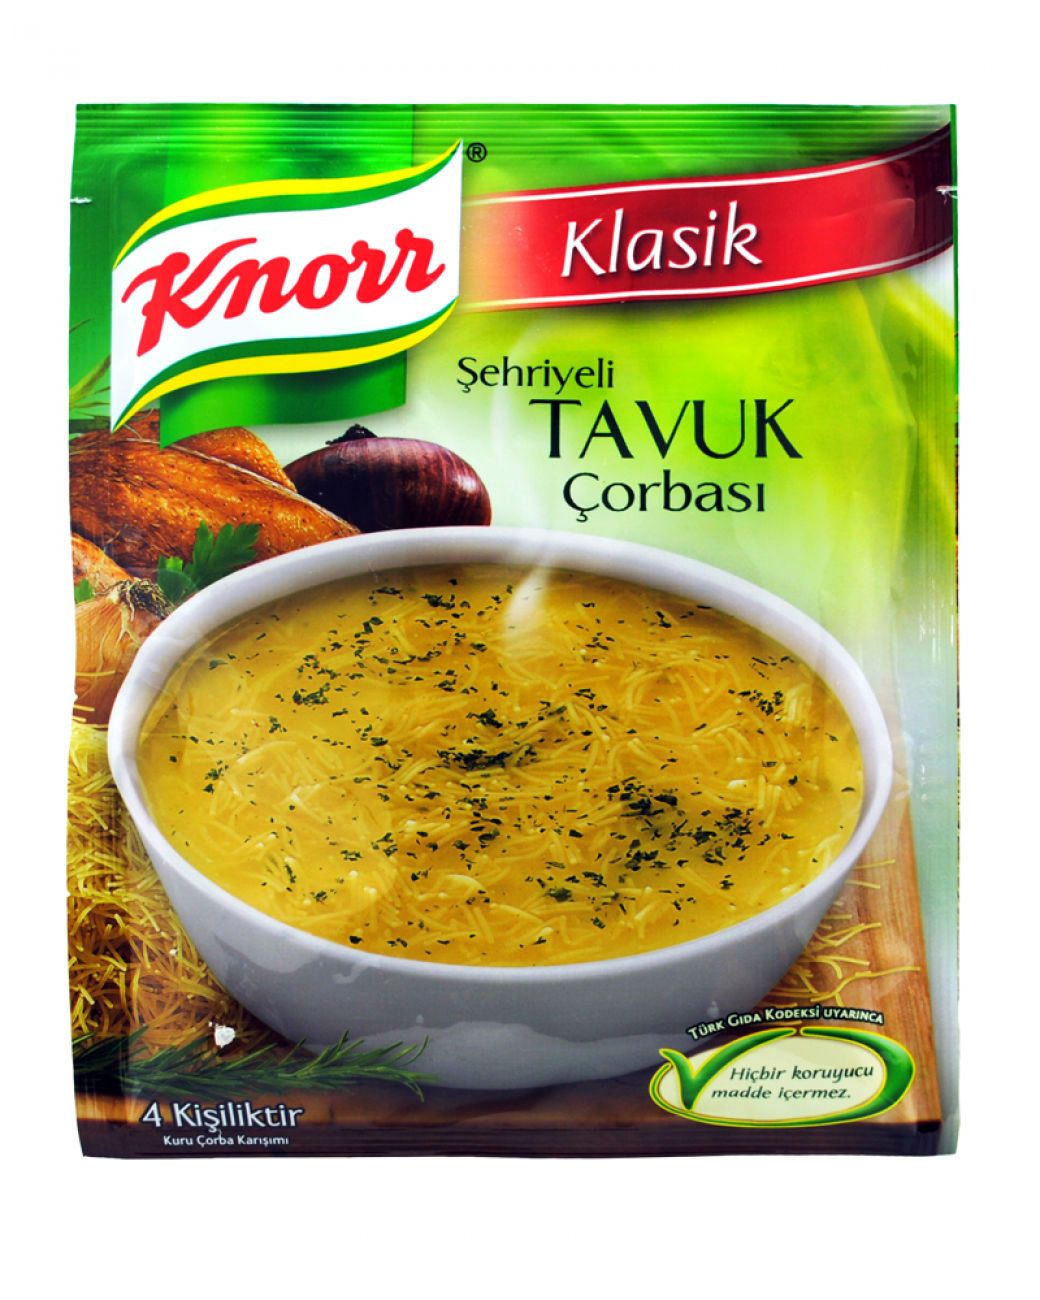 Knorr Sehriyeli Tavuk Corbasi (65G) - Aytac Foods